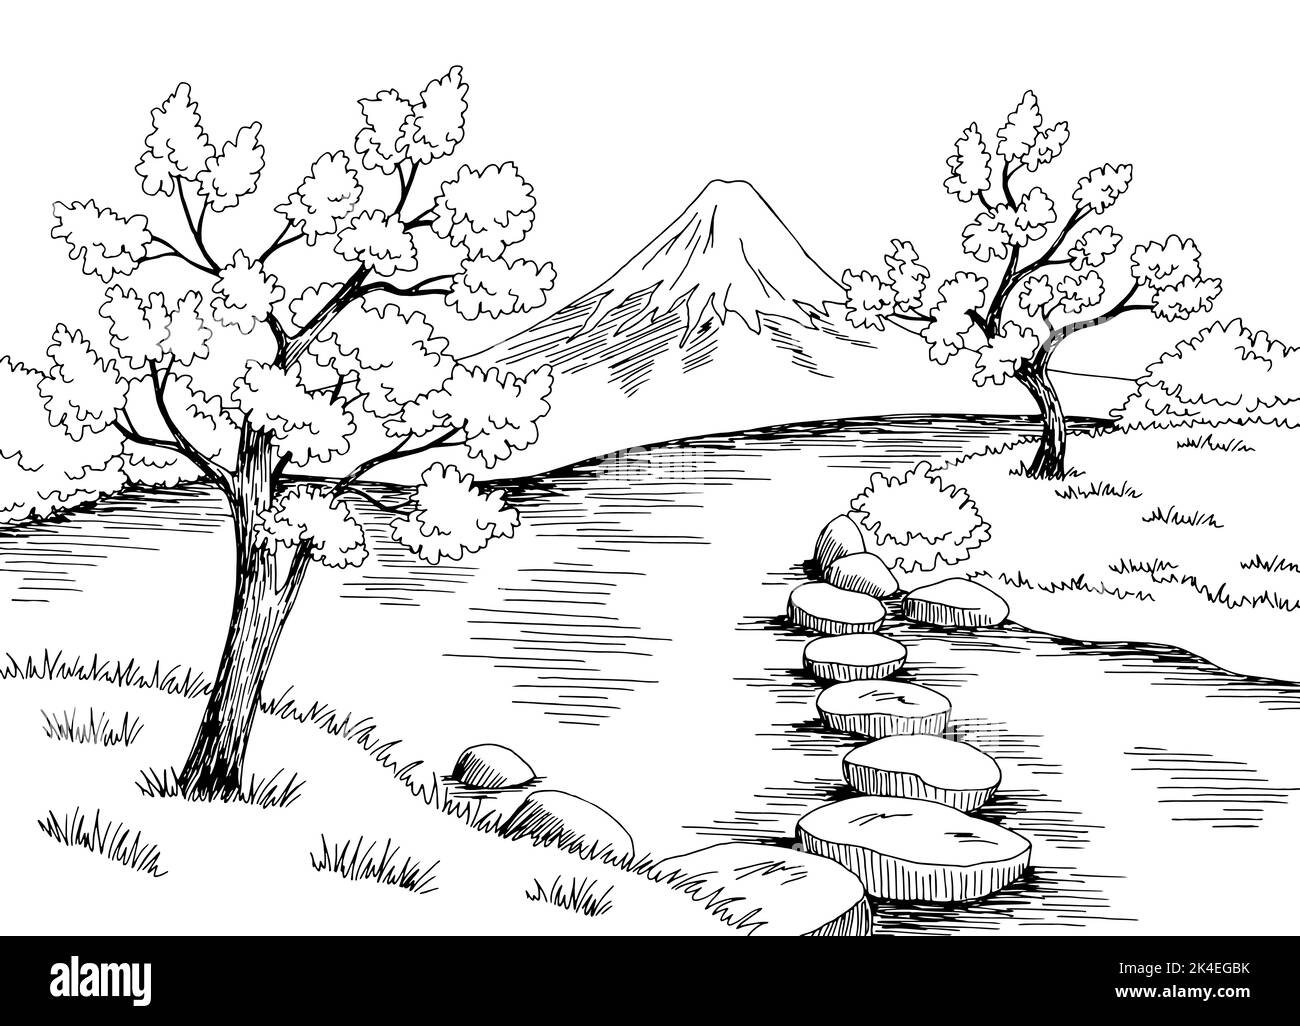 Japan garden lake graphic black white landscape sketch illustration vector Stock Vector